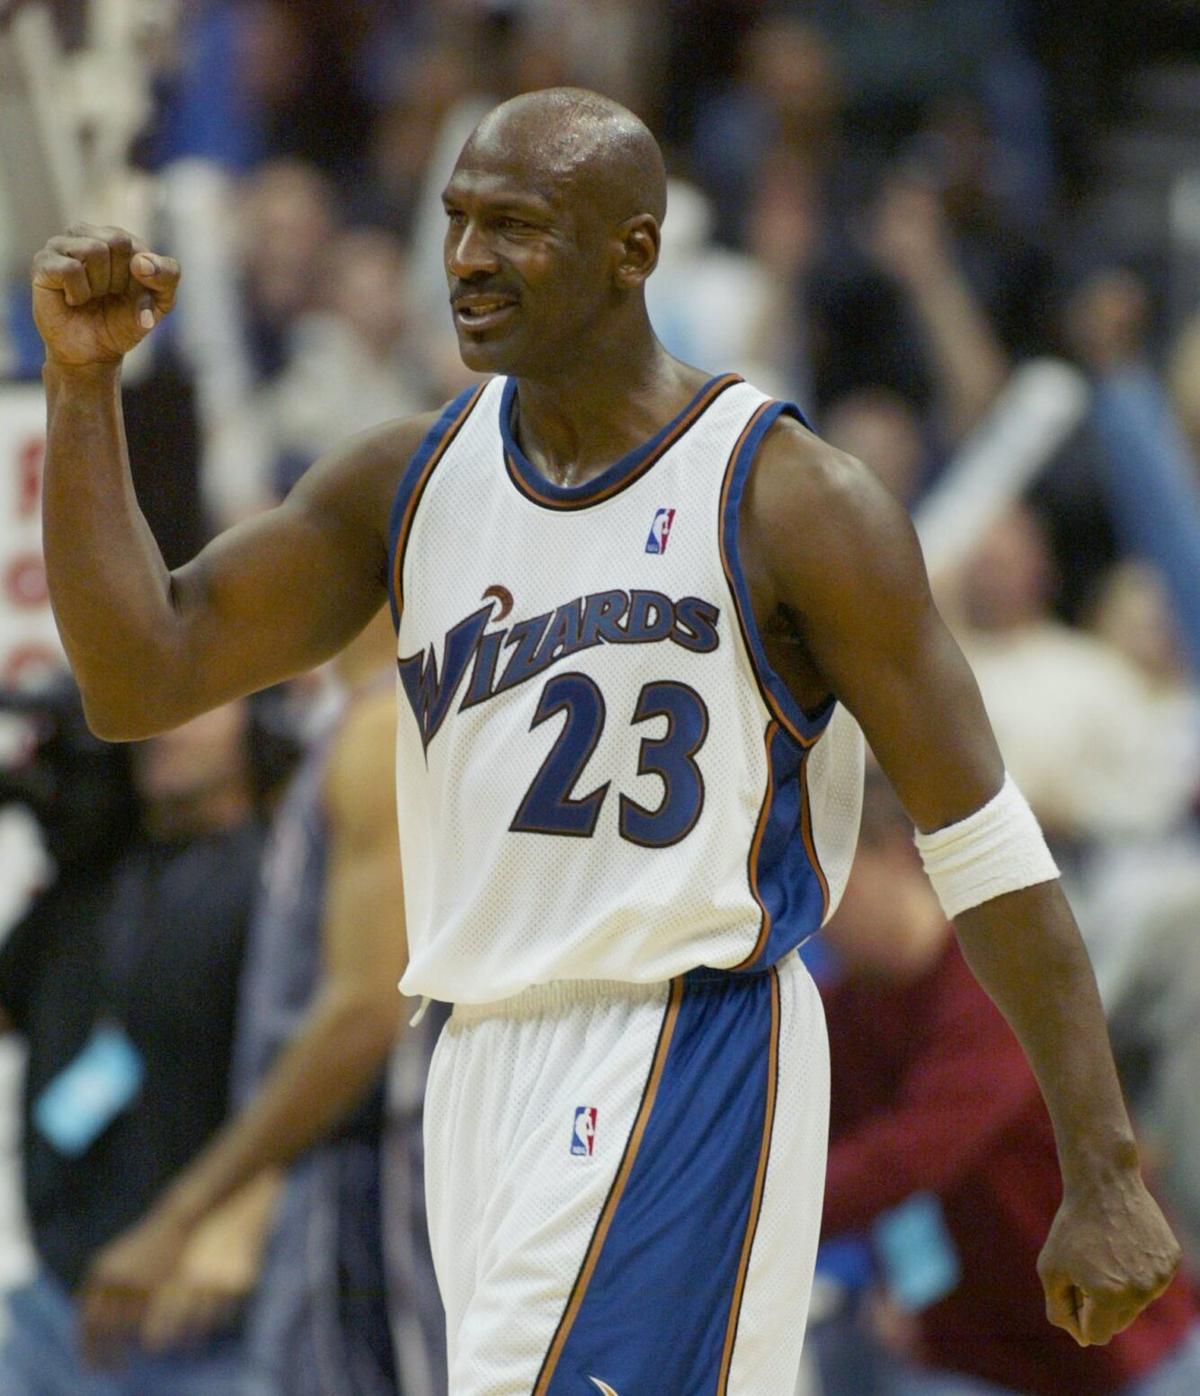 40-year old Michael Jordan scores 43 points (VIDEO)